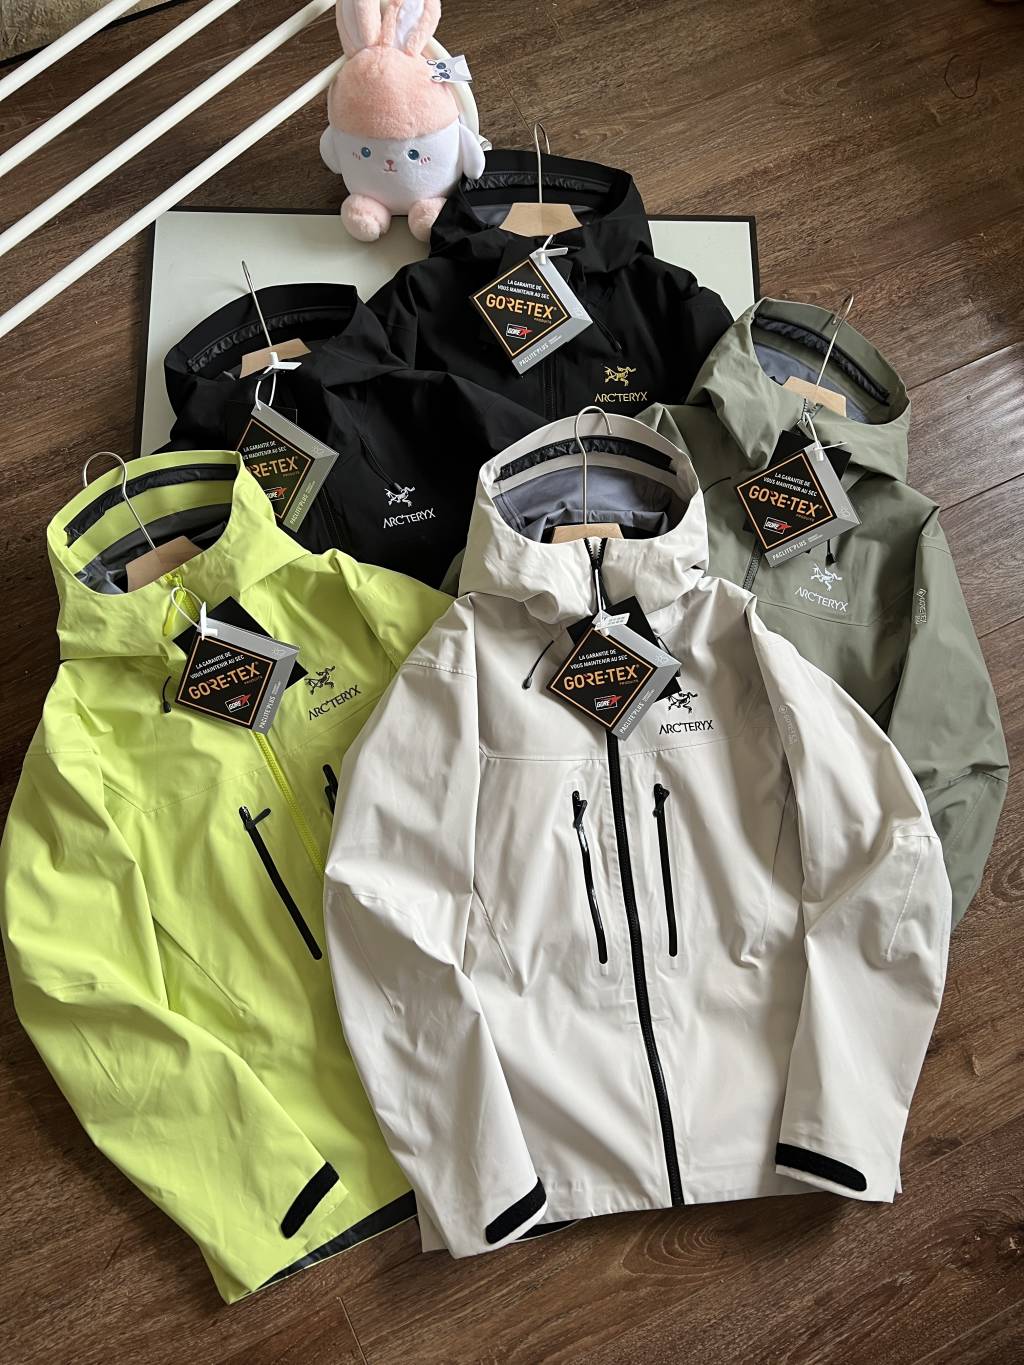 Yupoo Gucci Bags Watches Nike Clothing